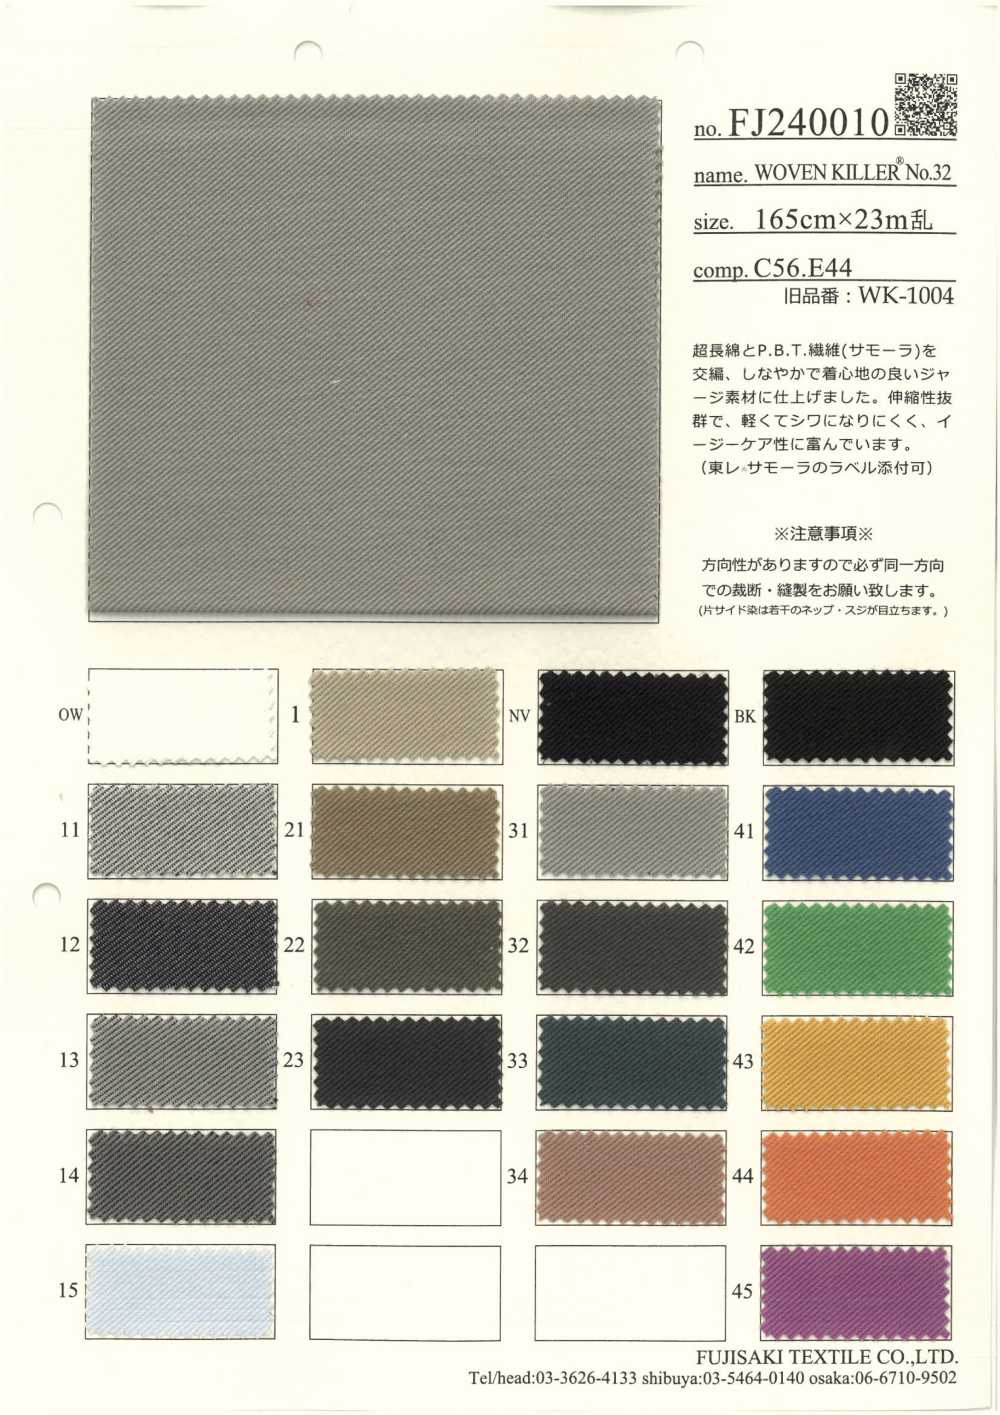 FJ240010 WOVWEN KILLER[Textilgewebe] Fujisaki Textile